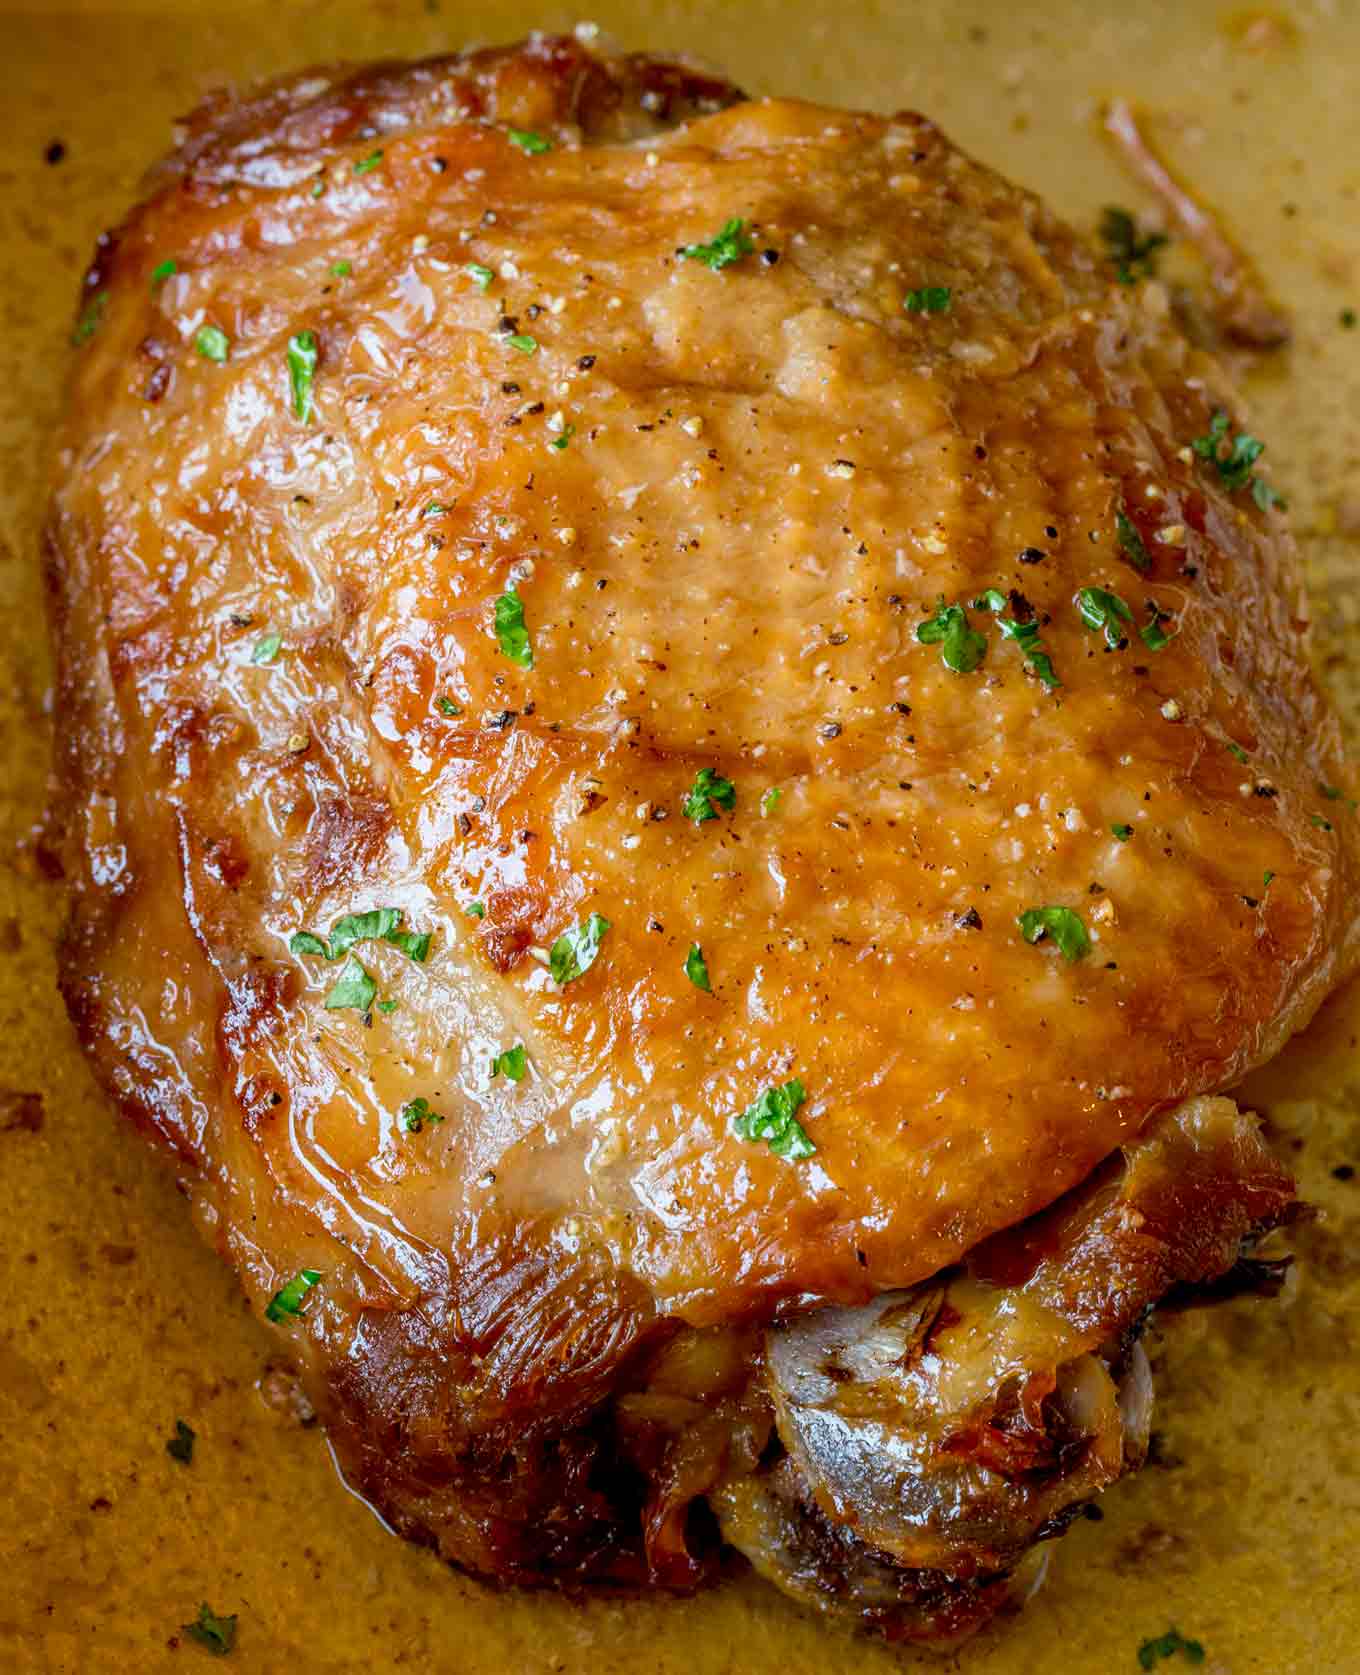 Easy Oven Roasted Turkey